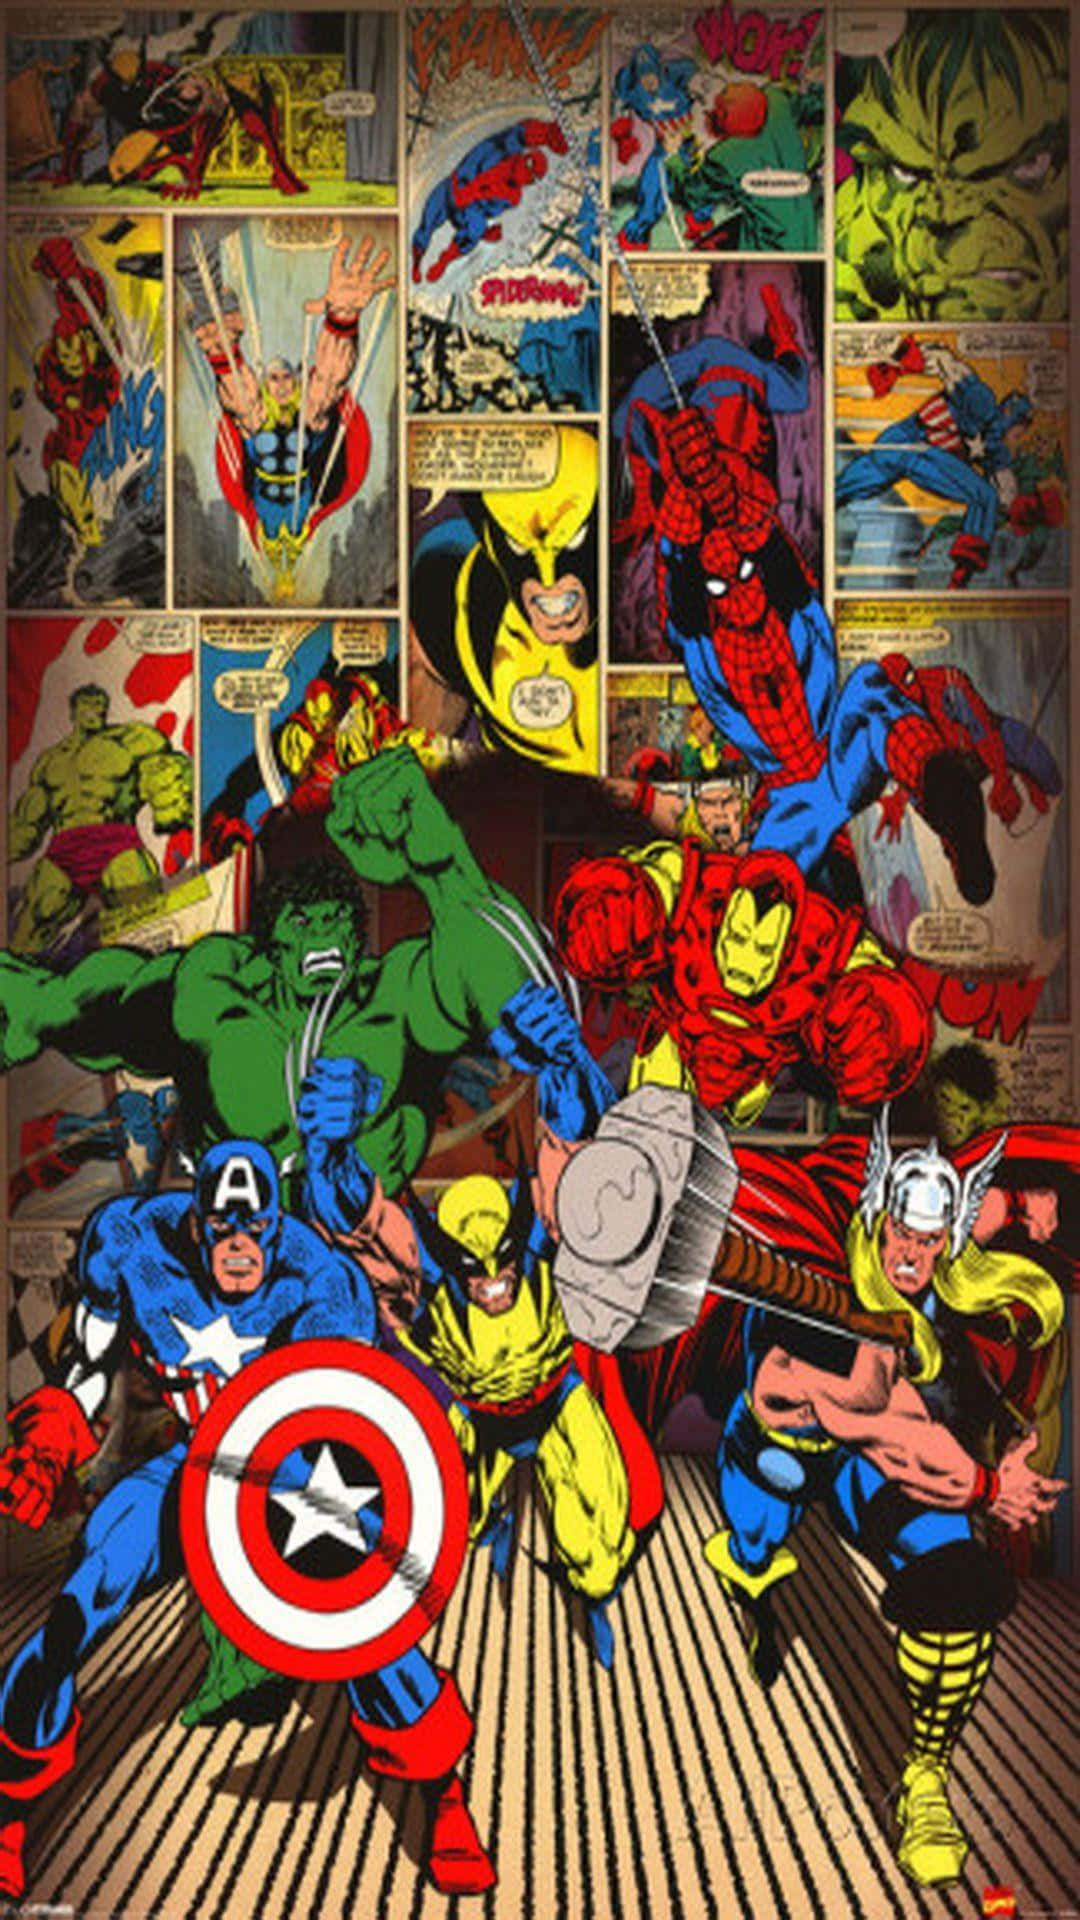 "Retro Captain America stands on guard against evil." Wallpaper